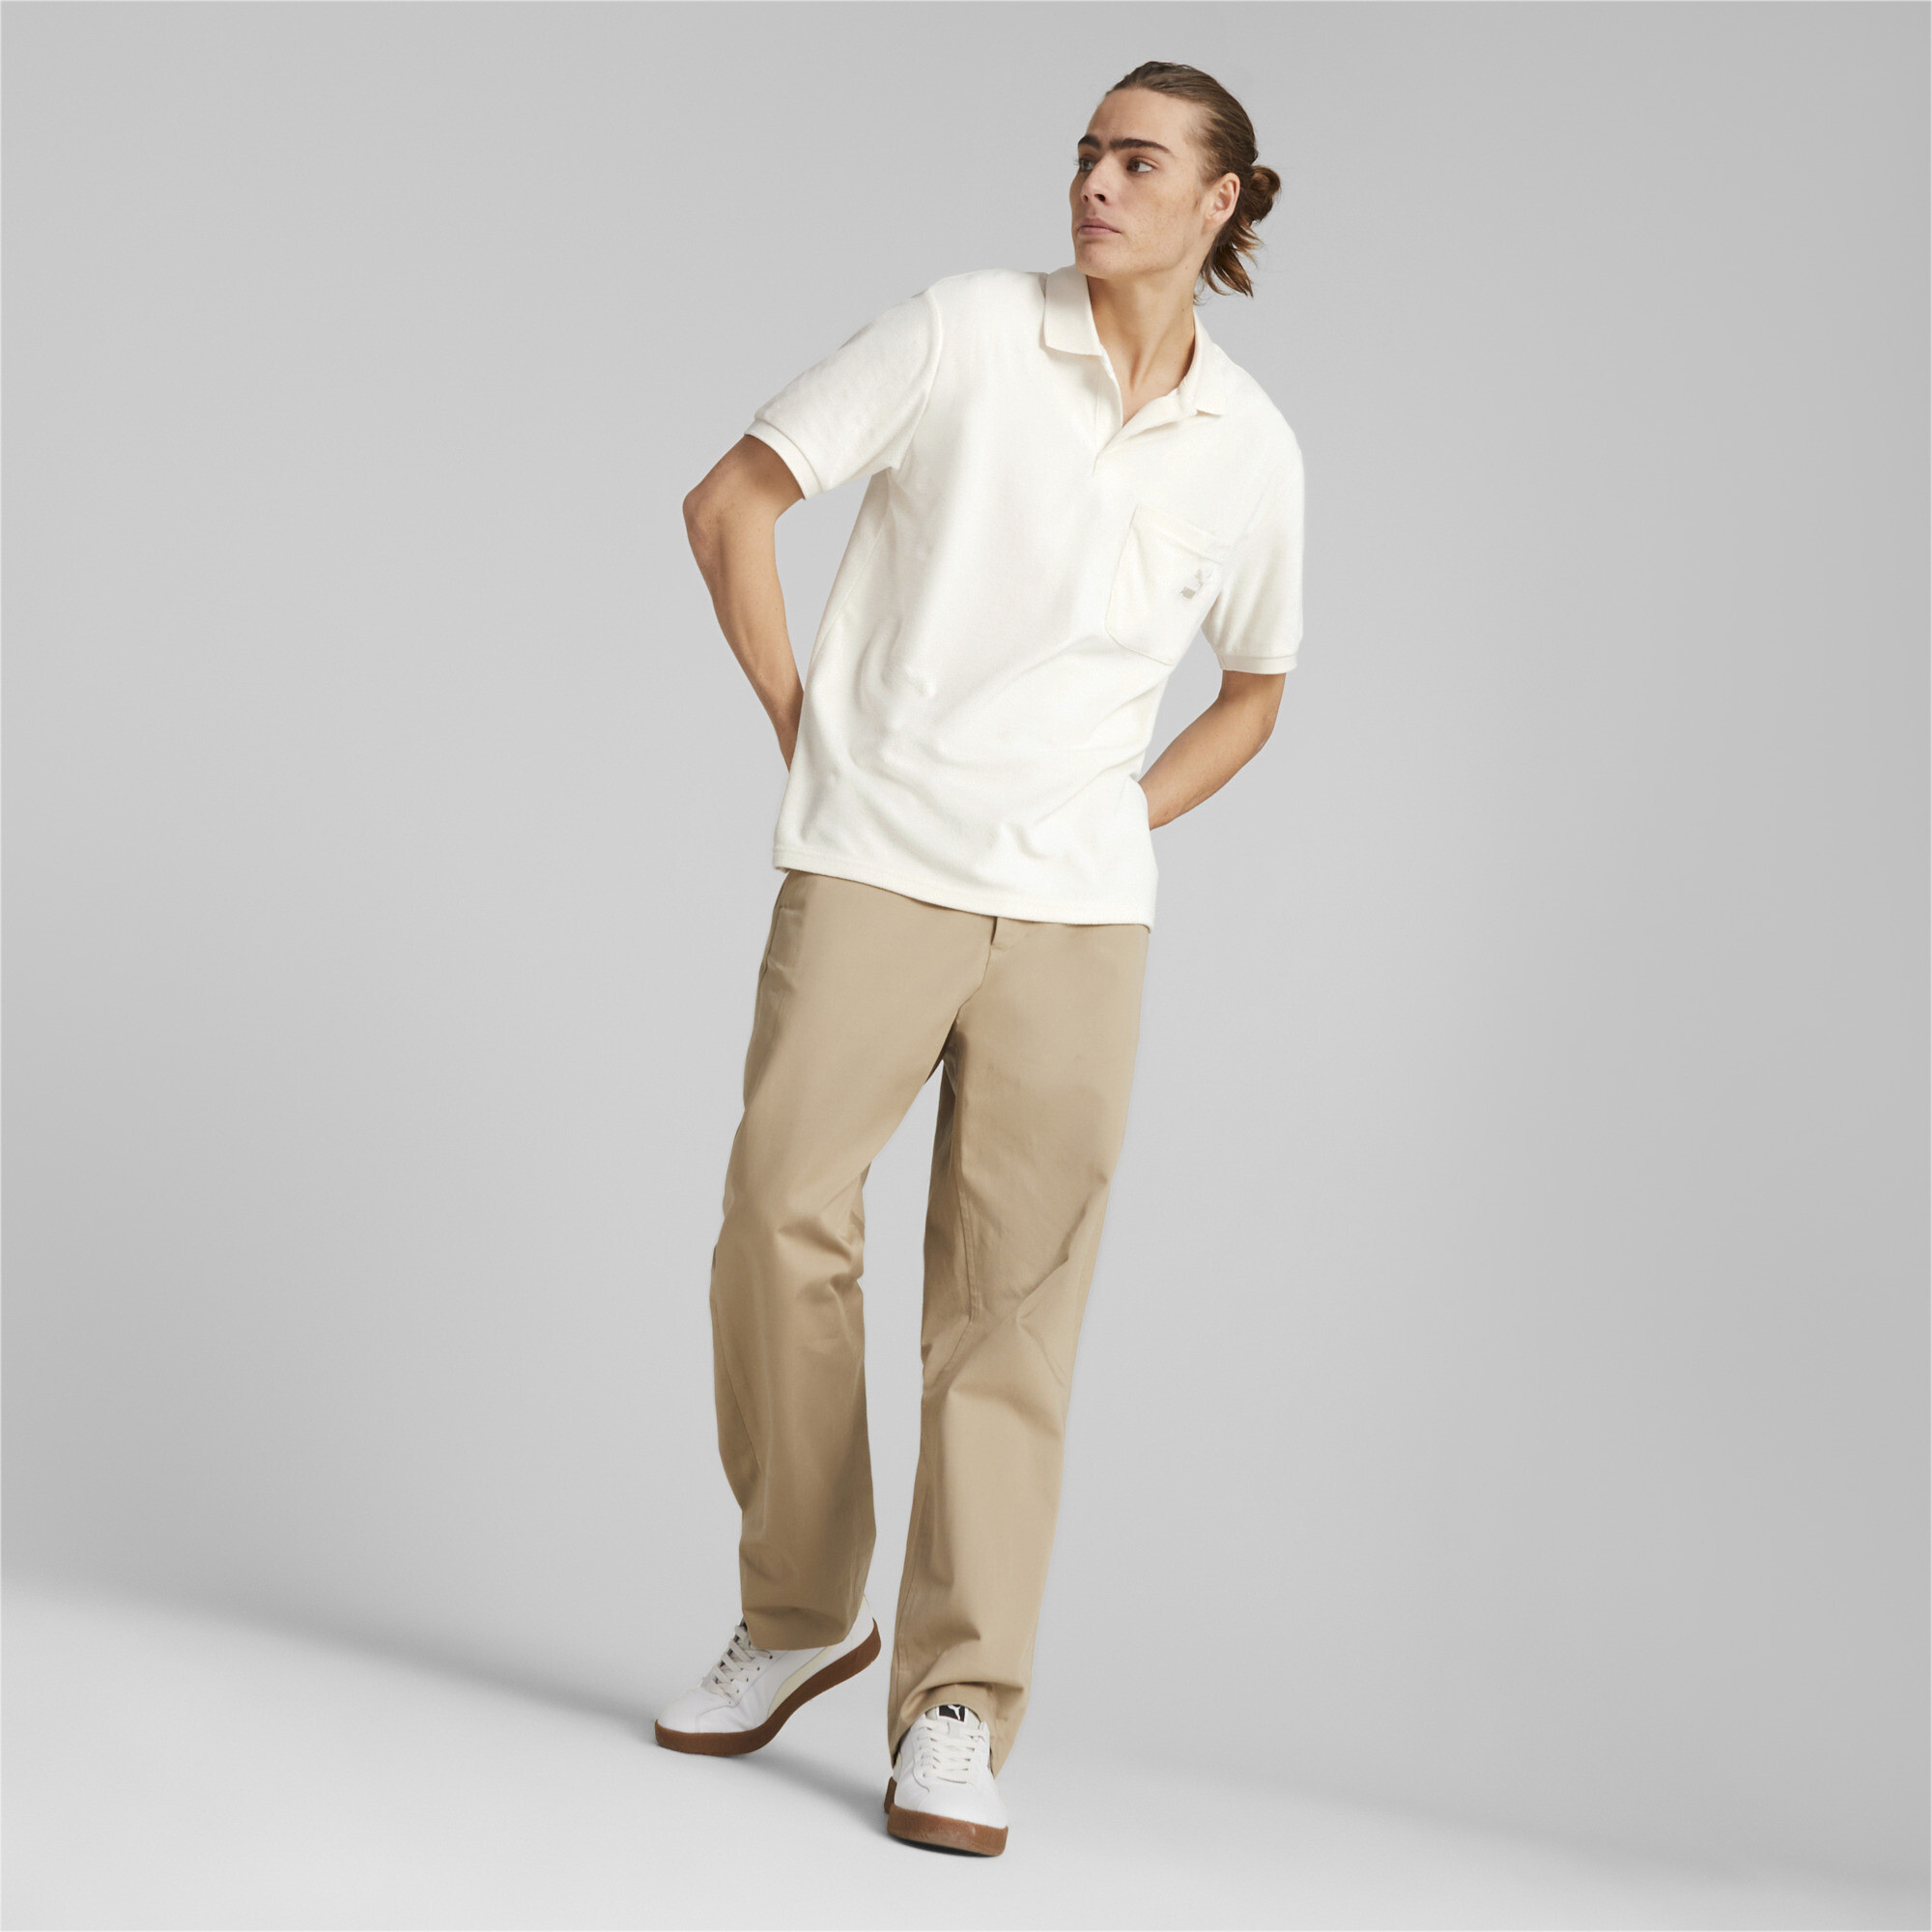 Men's Puma Classics Towelling Polo Shirt T-Shirt, White T-Shirt, Size XXL T-Shirt, Clothing